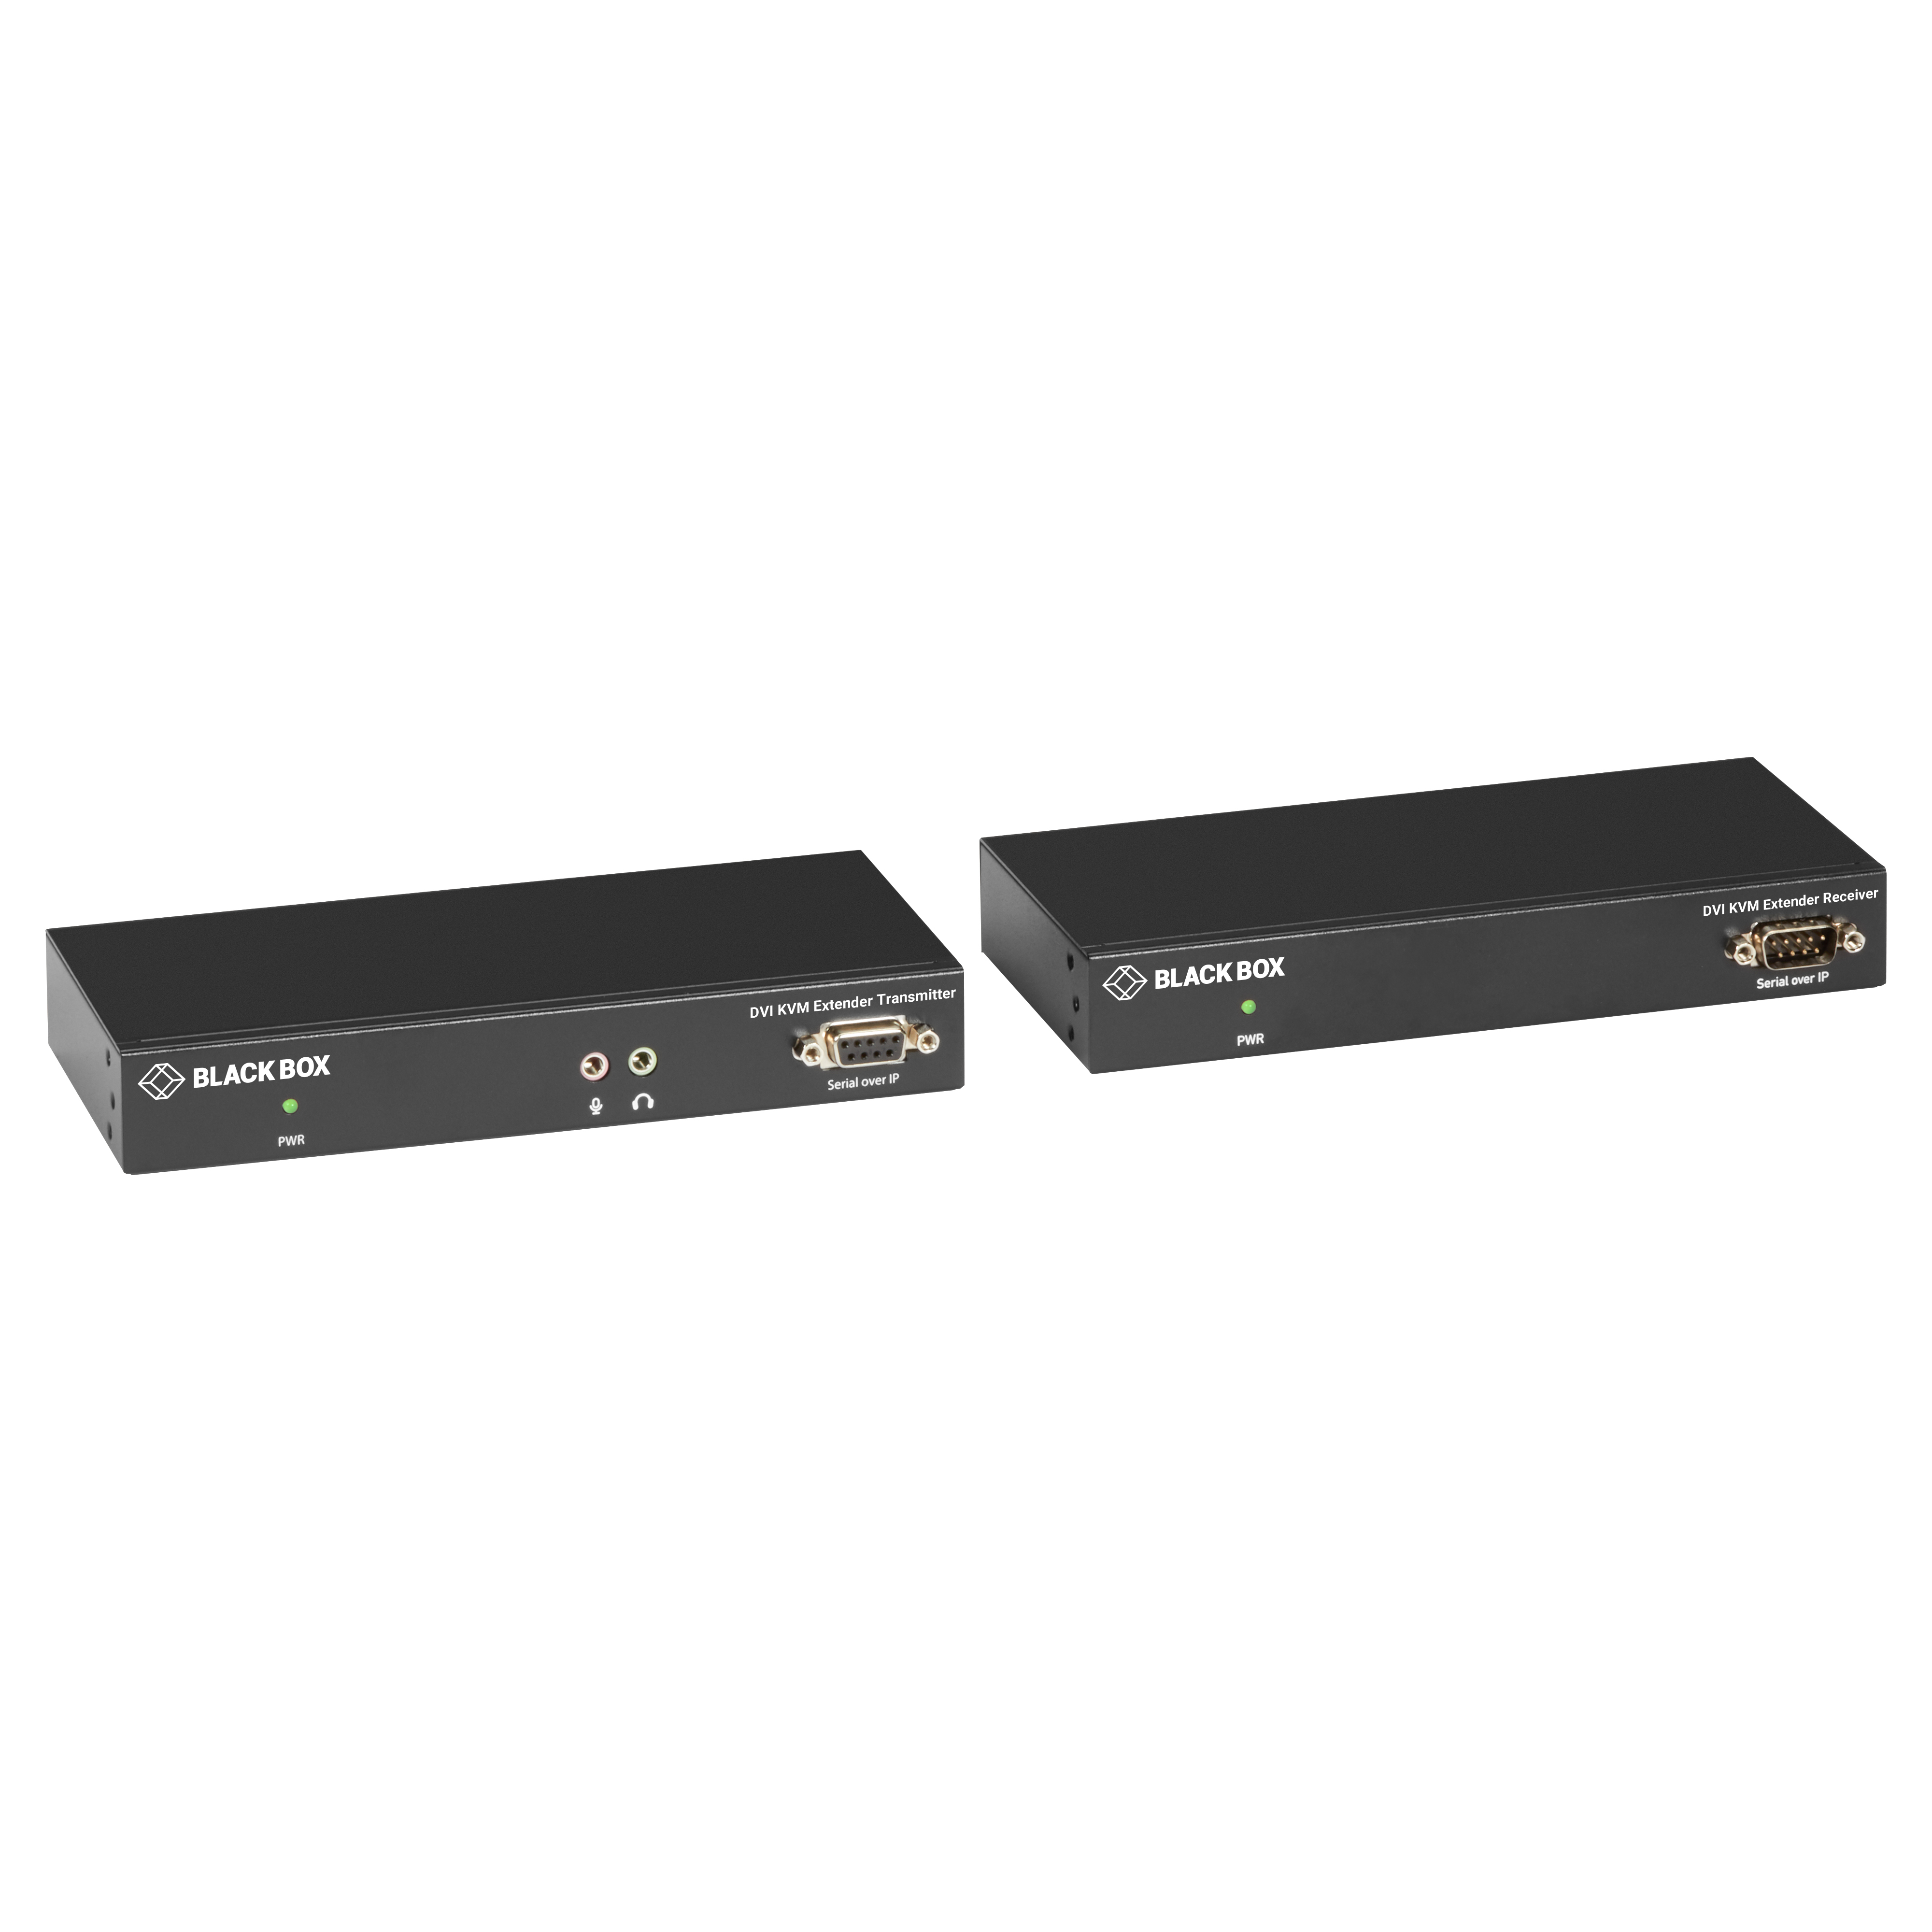 2-PORT LOCA Black Box Corp AC556A-R2 VGA Extender Kit with Audio 2 Port Local BLACK BOX CORP AC556A-R2 VGA EXTENDER KIT WITH AUDIO 